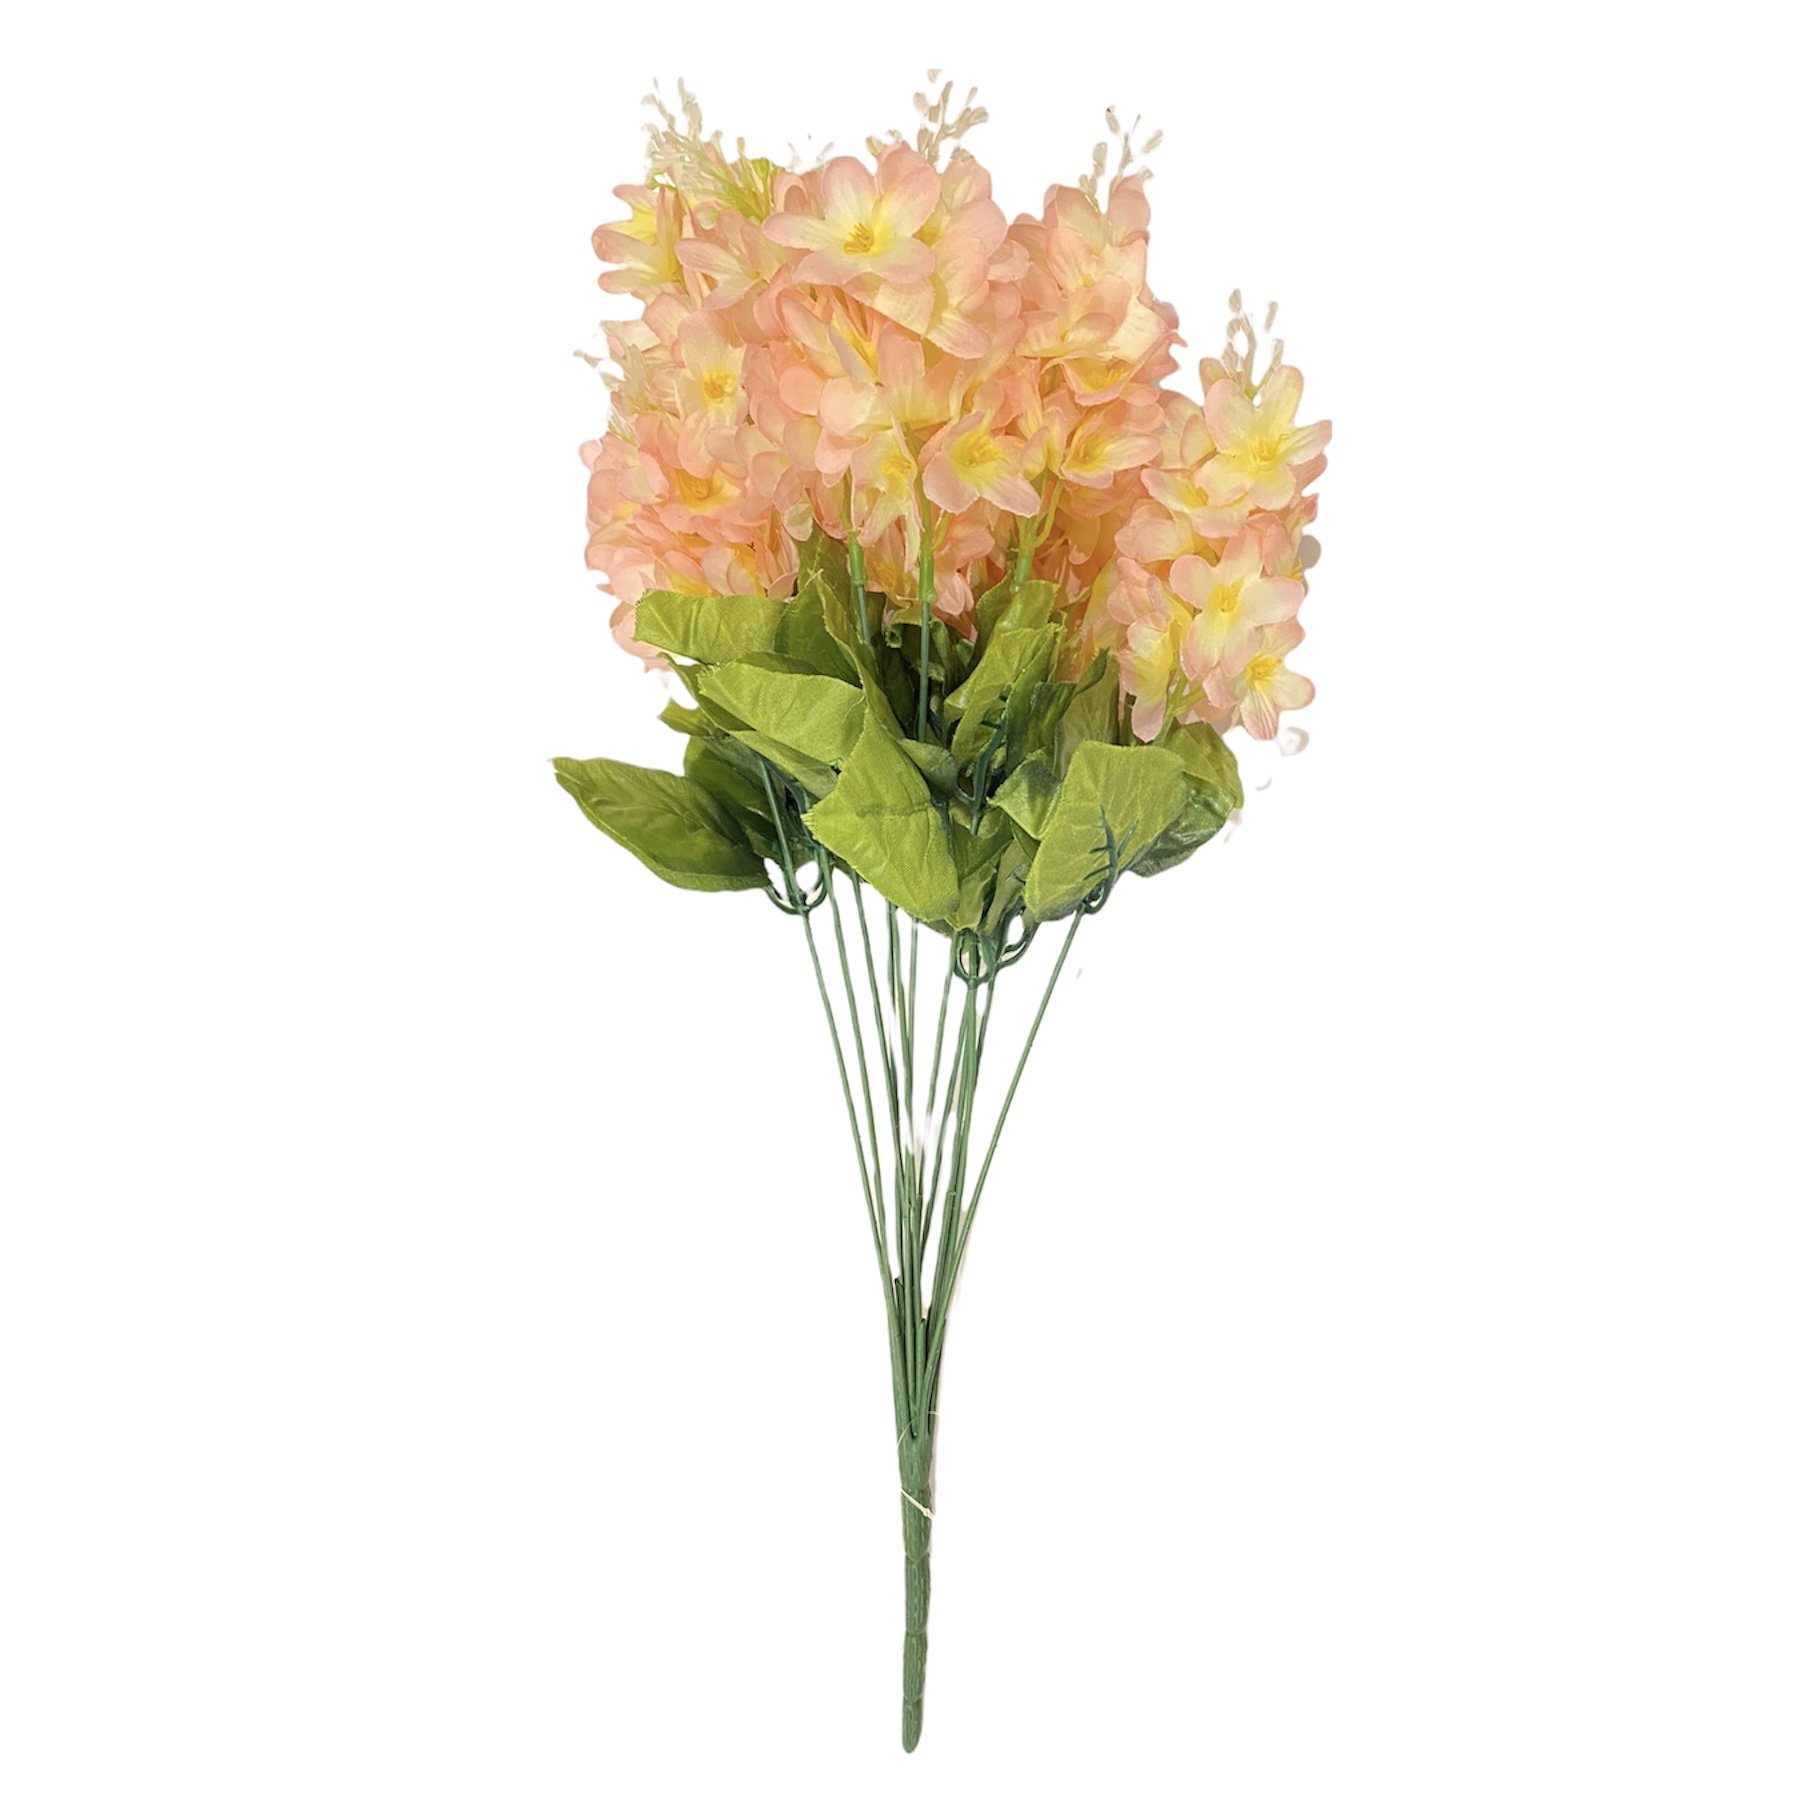 دسته گل مصنوعی مدل سنبل 12 گل کد A22